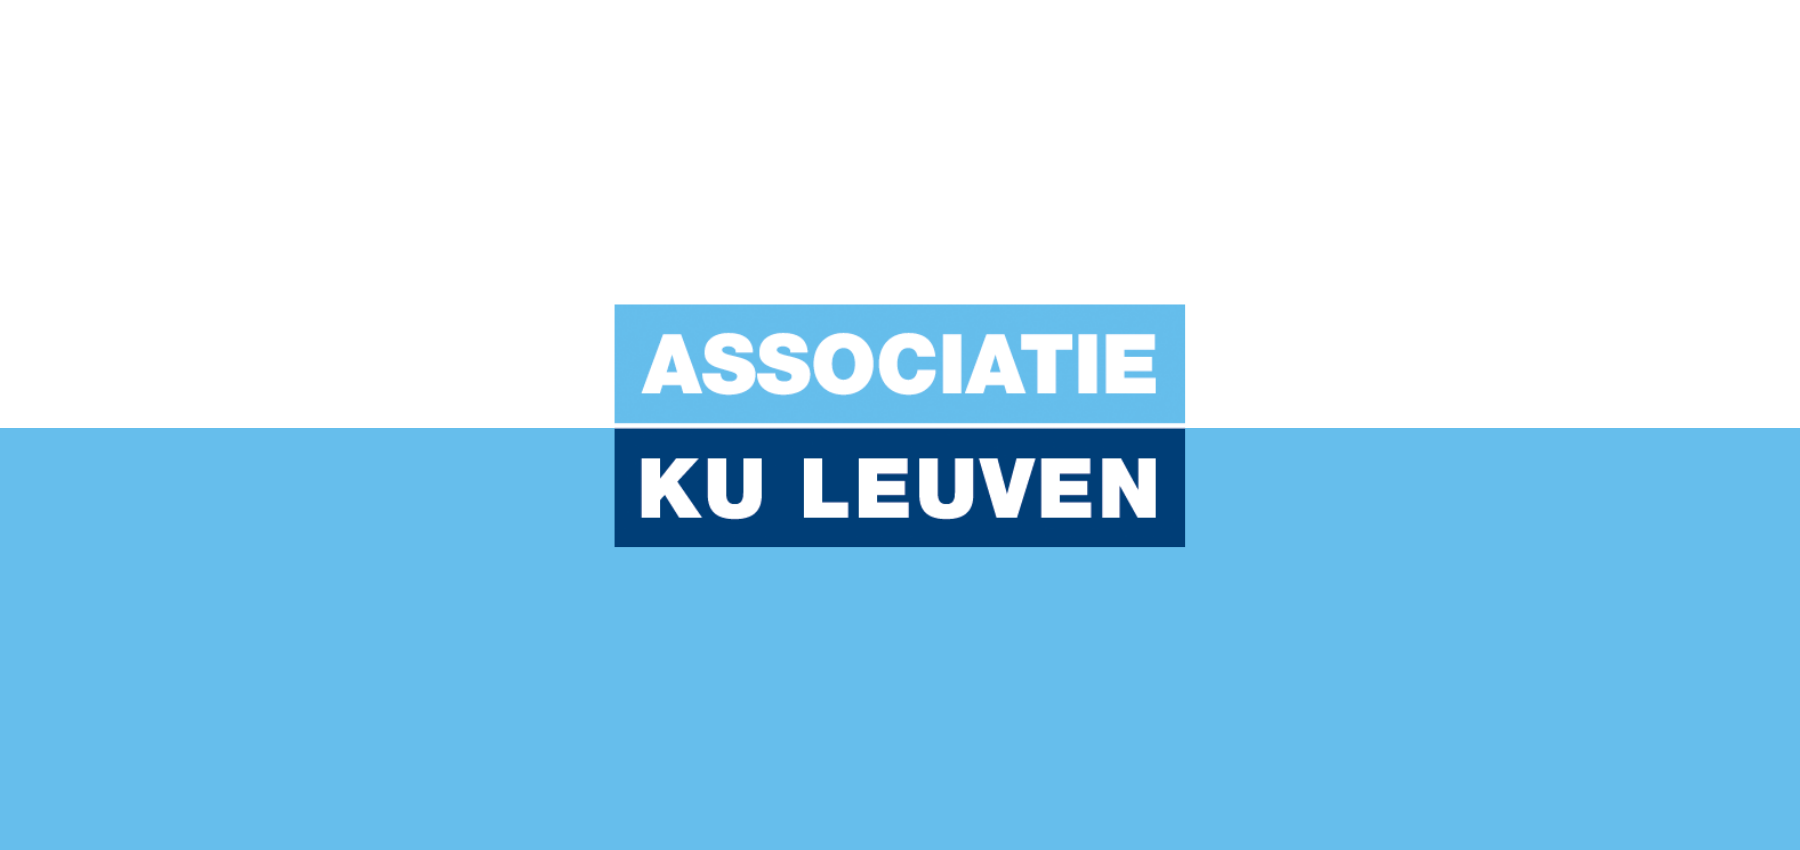 Associatie KU Leuven - Media Service België